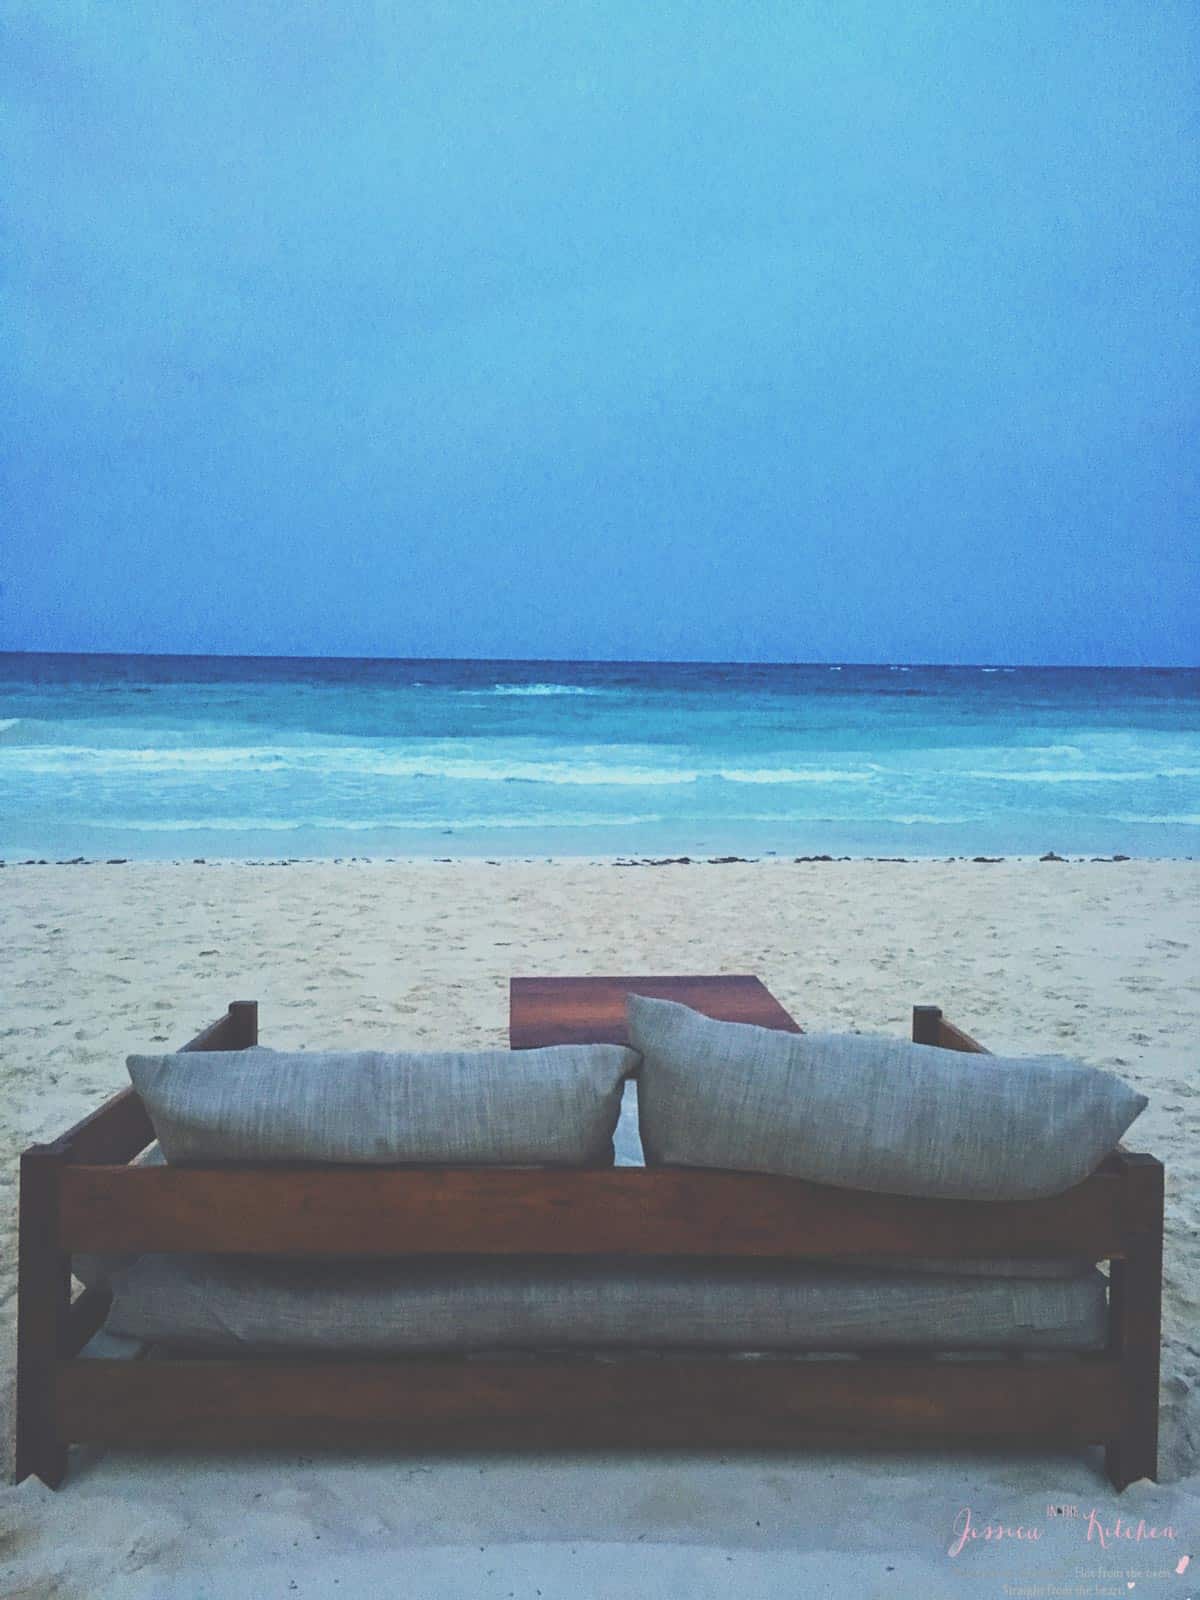 A couch on a beach. 